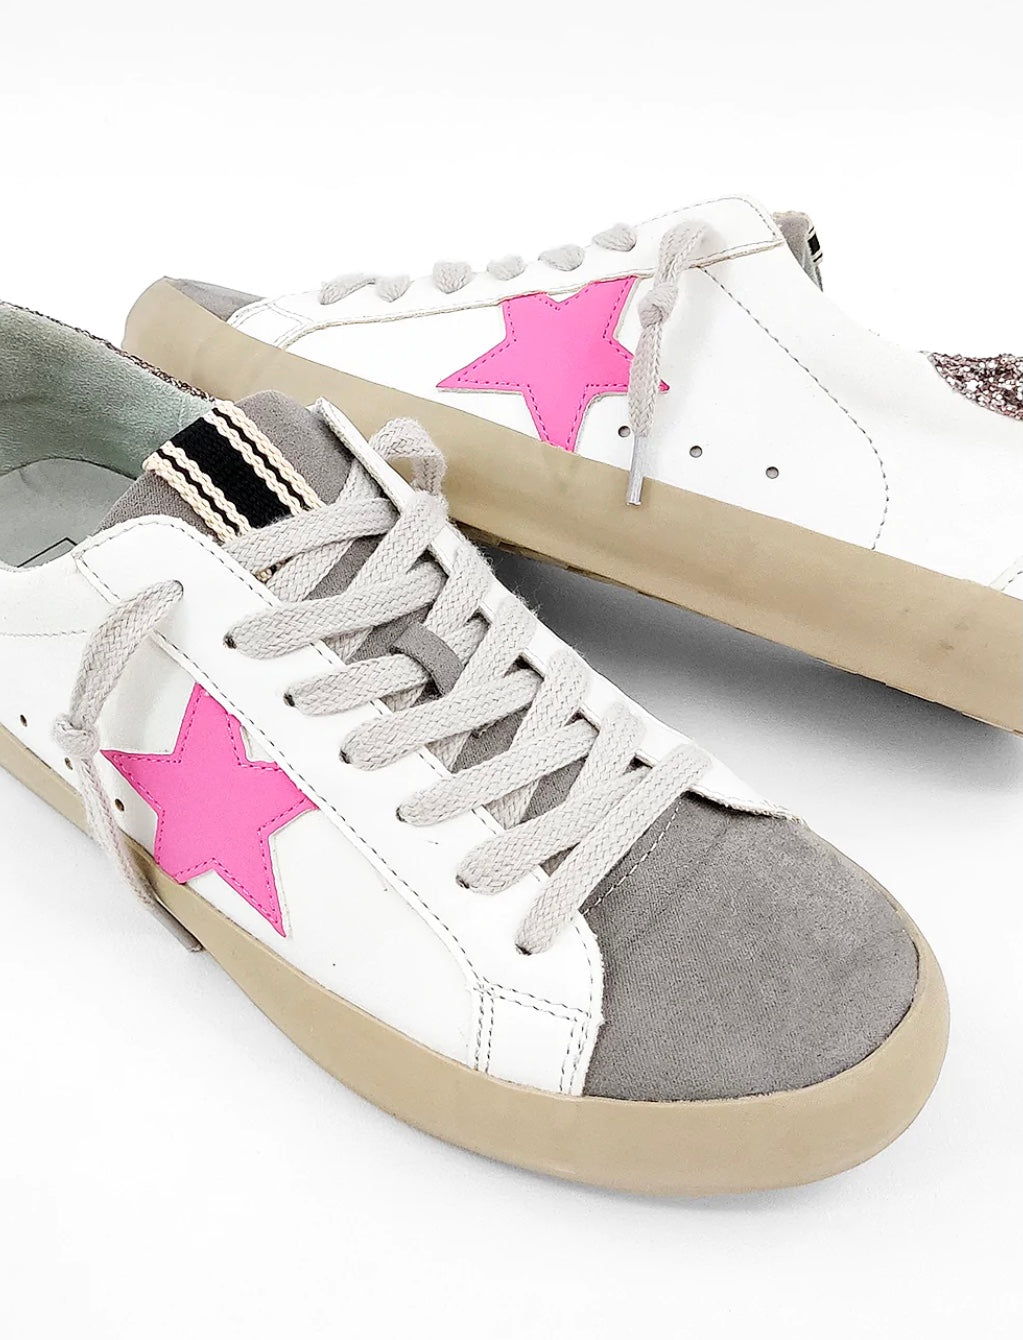 Shu Shop Paris sneaker with pink star